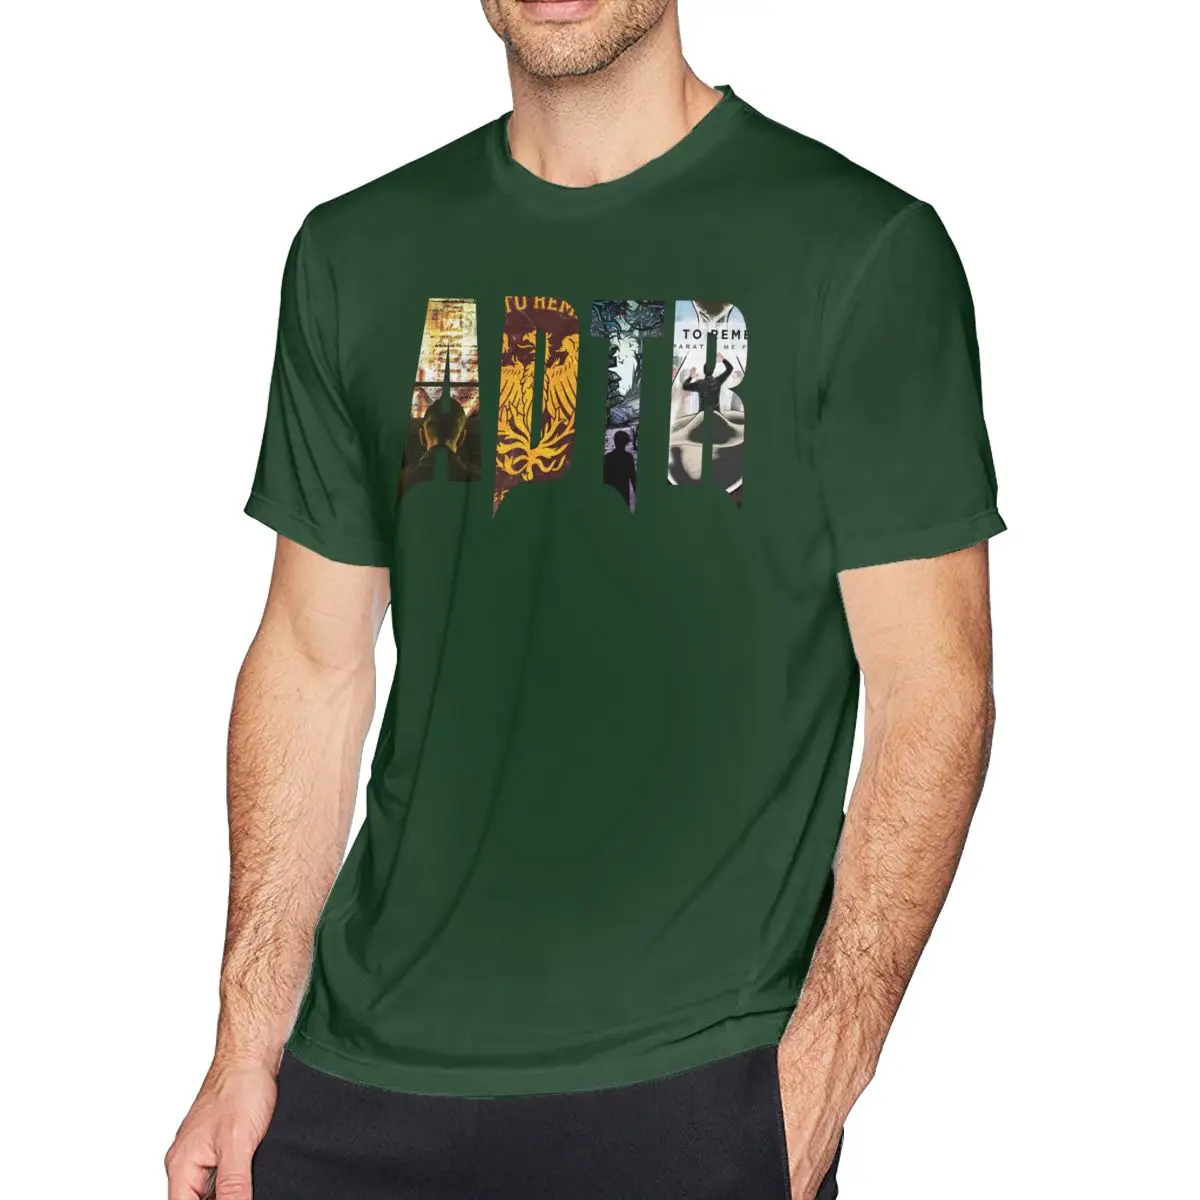 Футболка «A Day To Remember» футболка из 100 хлопка с короткими рукавами забавная футболка - Color: Dark Green